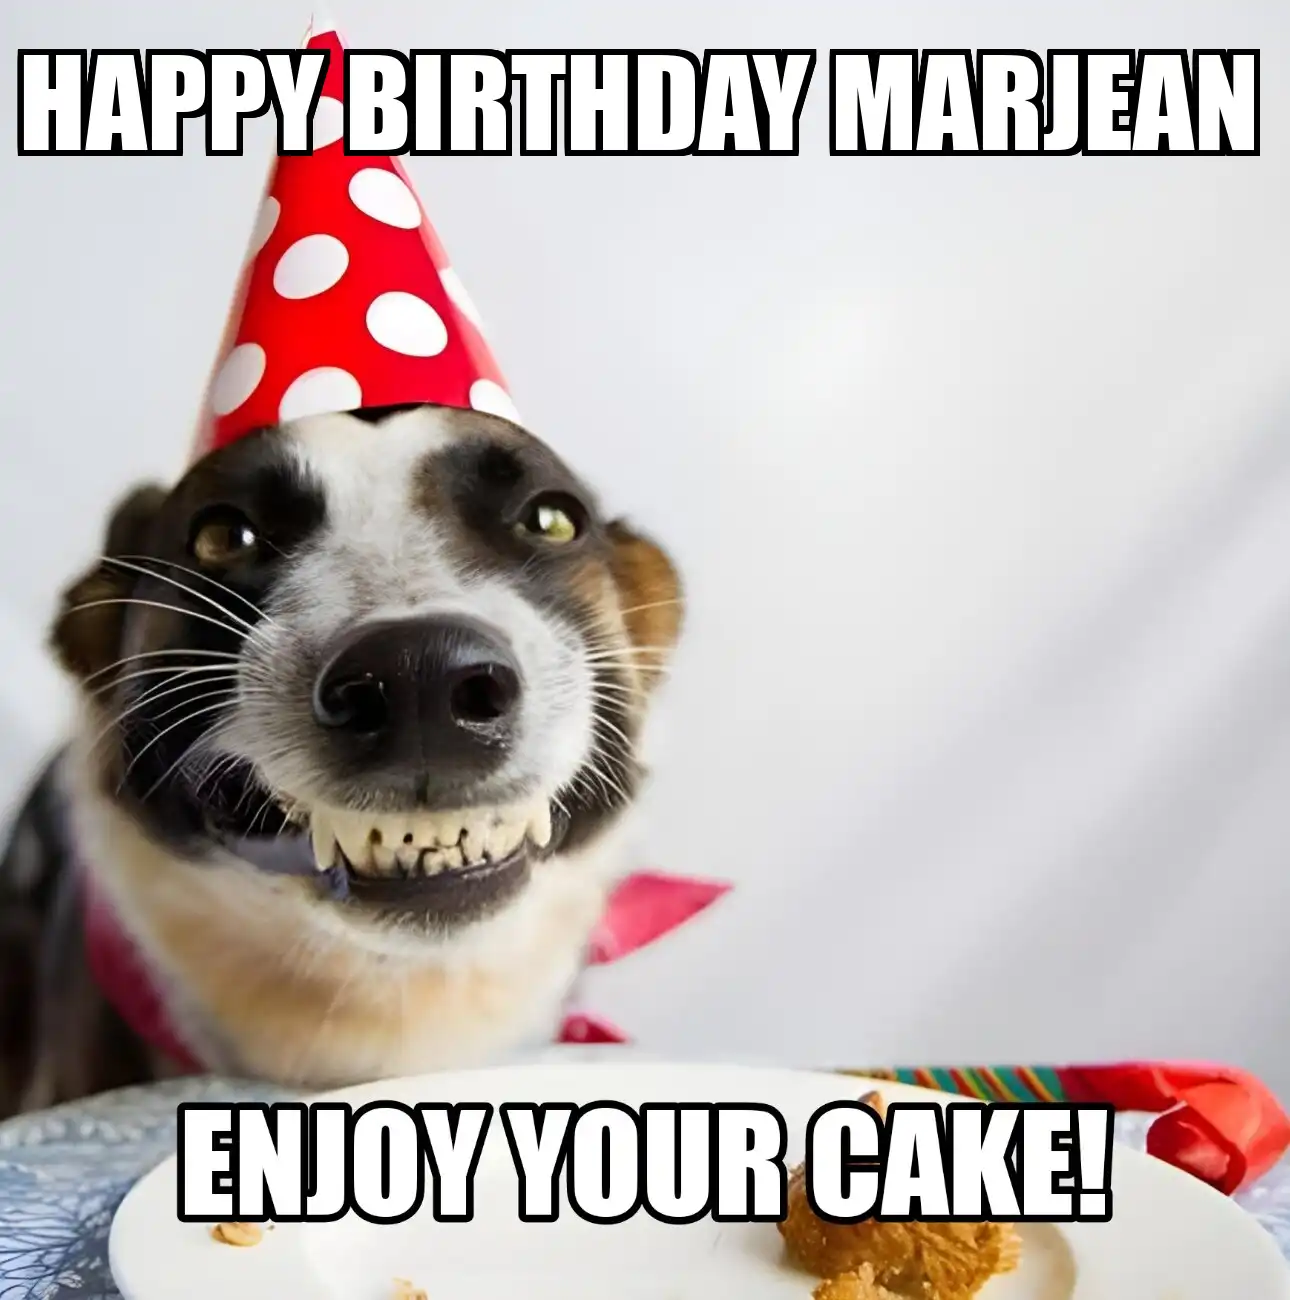 Happy Birthday Marjean Enjoy Your Cake Dog Meme